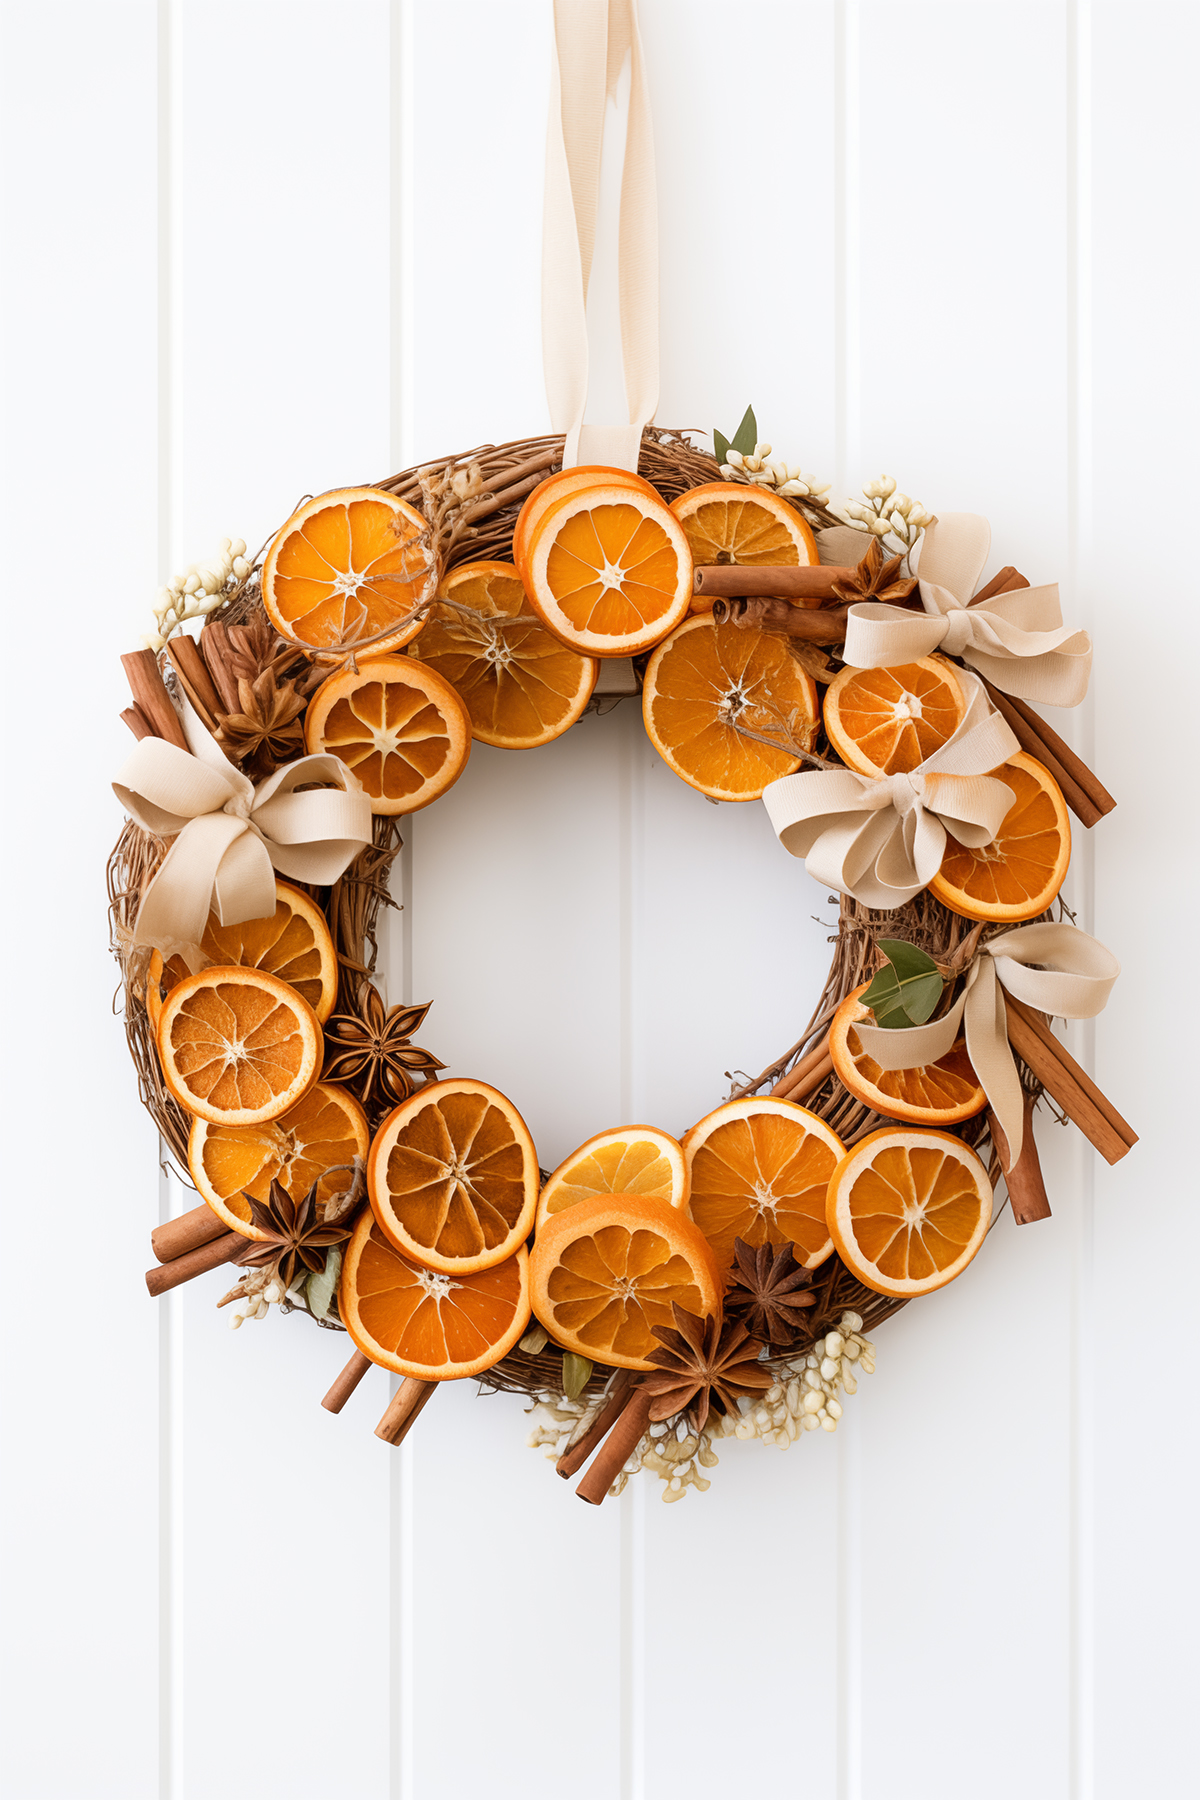 DIY Christmas wreath with dried orange slices and cinnamon sticks.